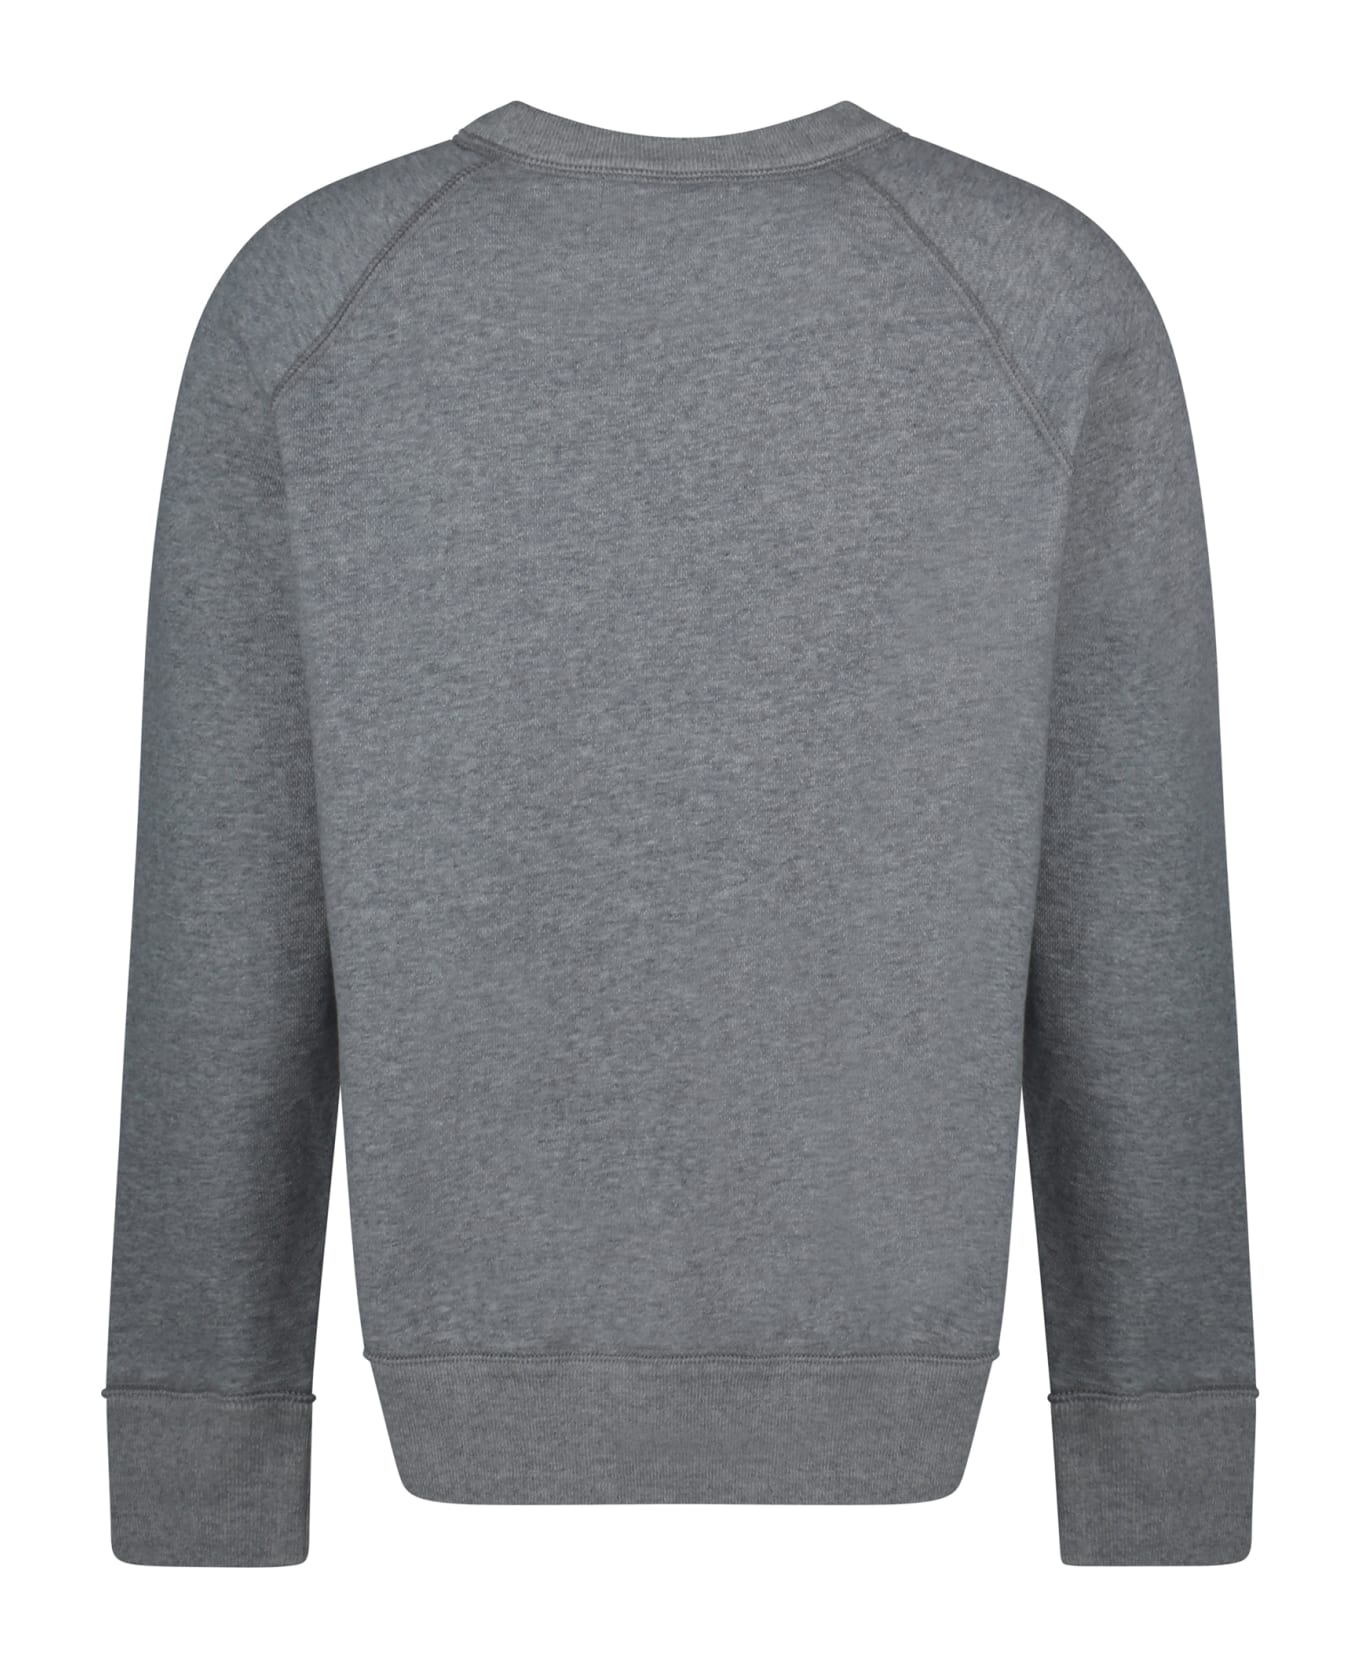 Marant Étoile Milla Sweatshirt - Grey